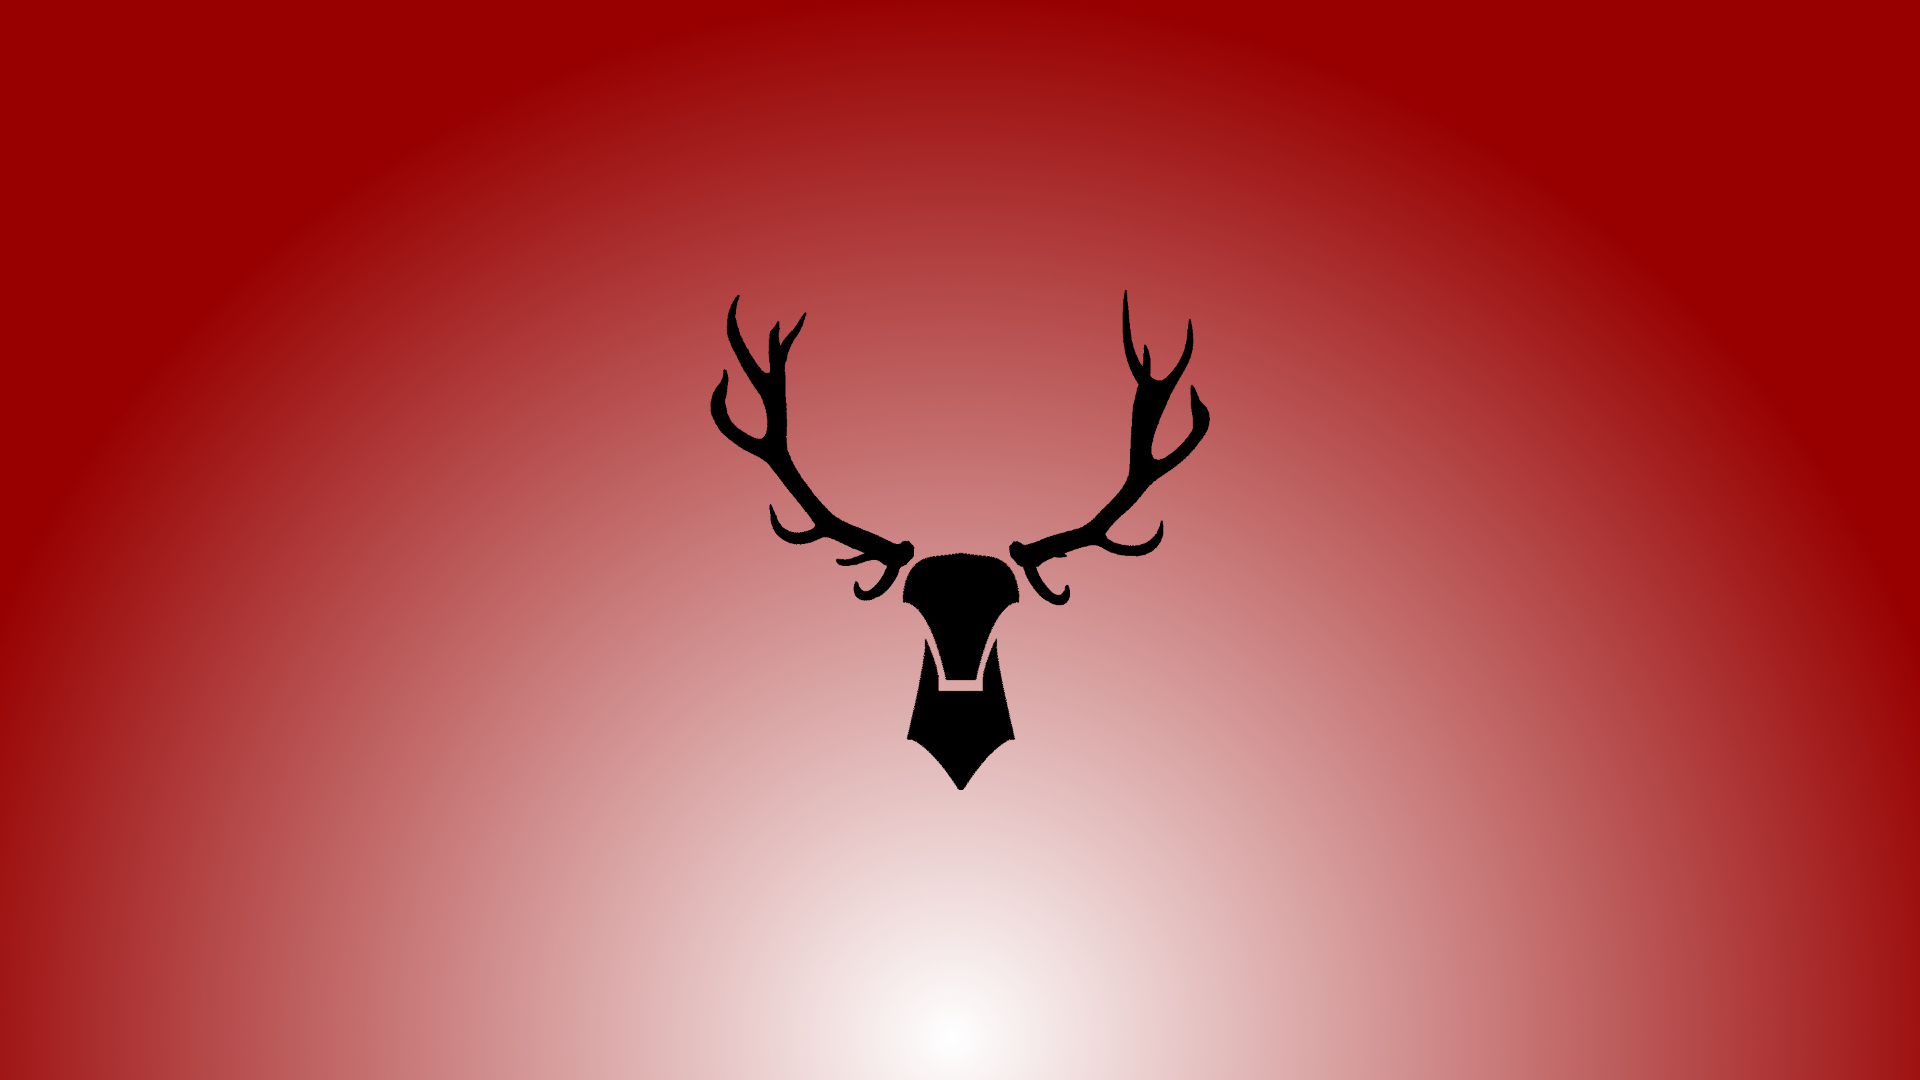 1920x1080 Wallpaper : illustration, deer, red, branch, reindeer, computer wallpaper ThorRagnarok 26484 HD Wallpapers